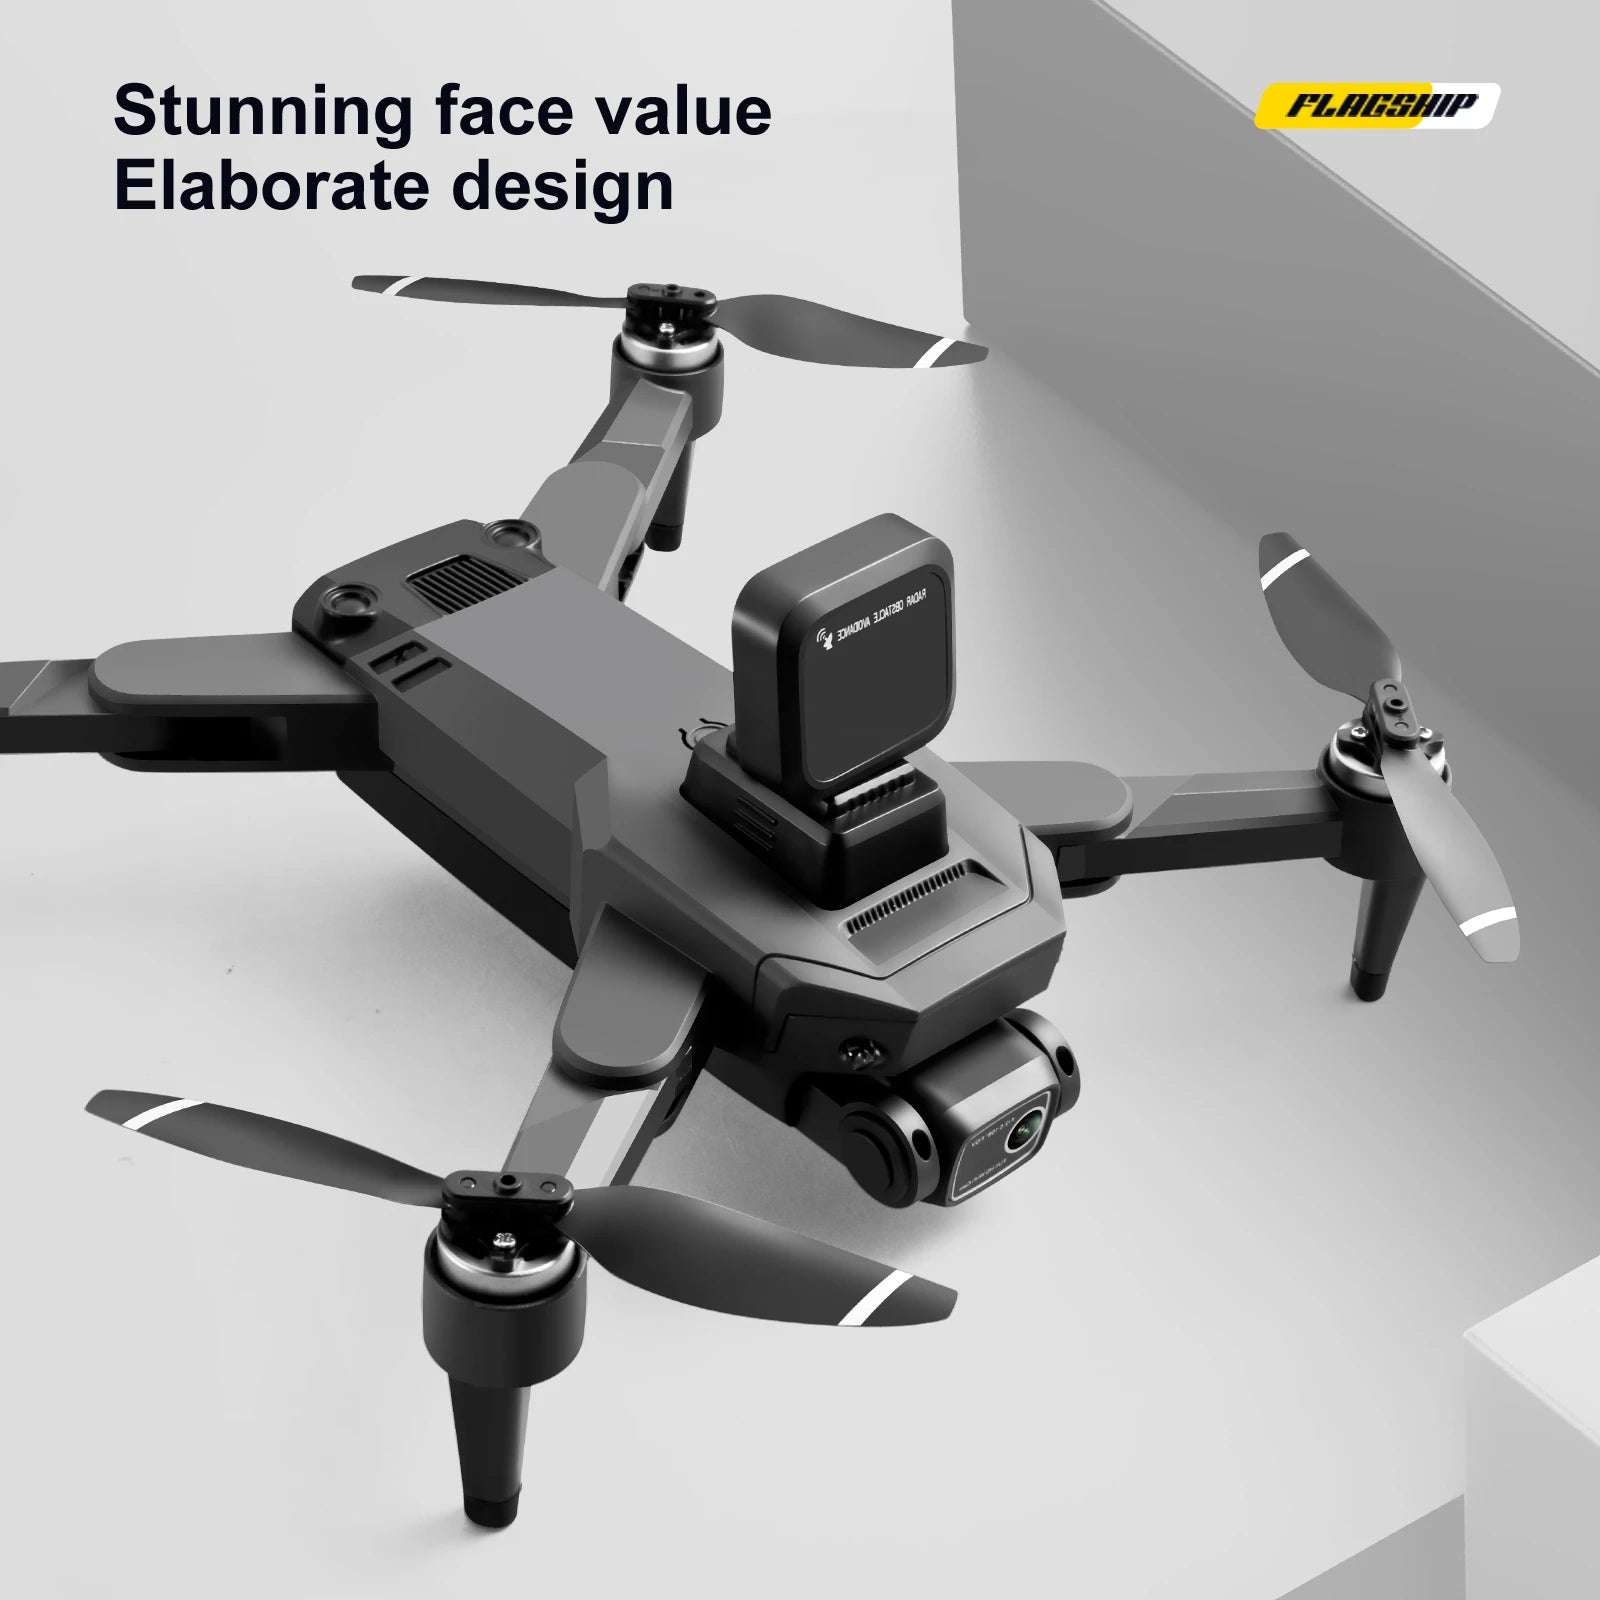 S109 GPS Drone, Stunning face value FLAEGHIP Elaborate design a0u HDllat